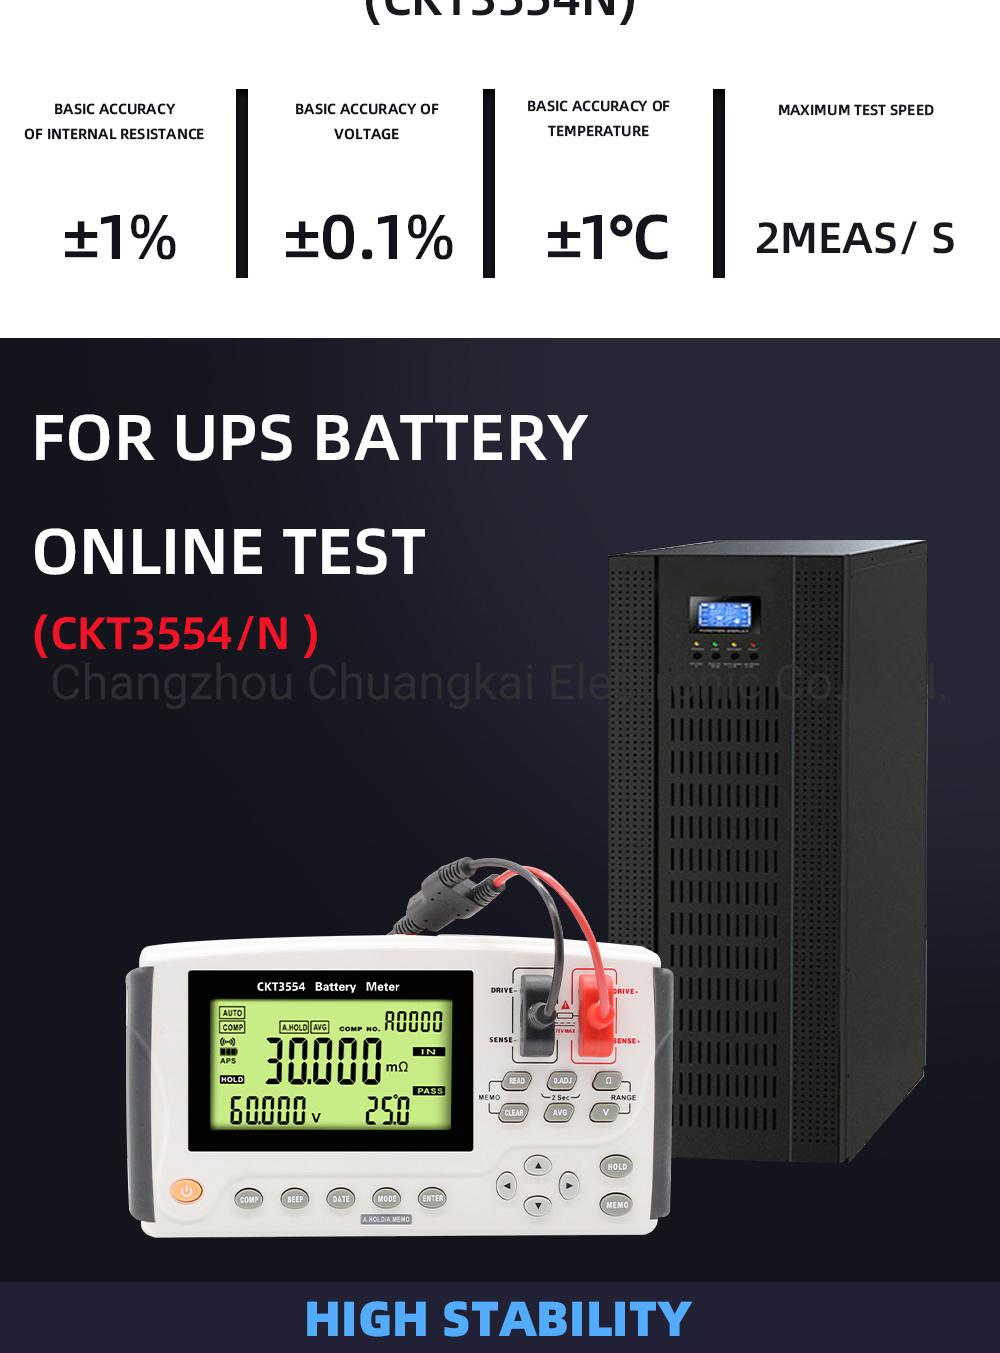 Ckt3554 Portable Type Online Battery Tester for UPS Measurement